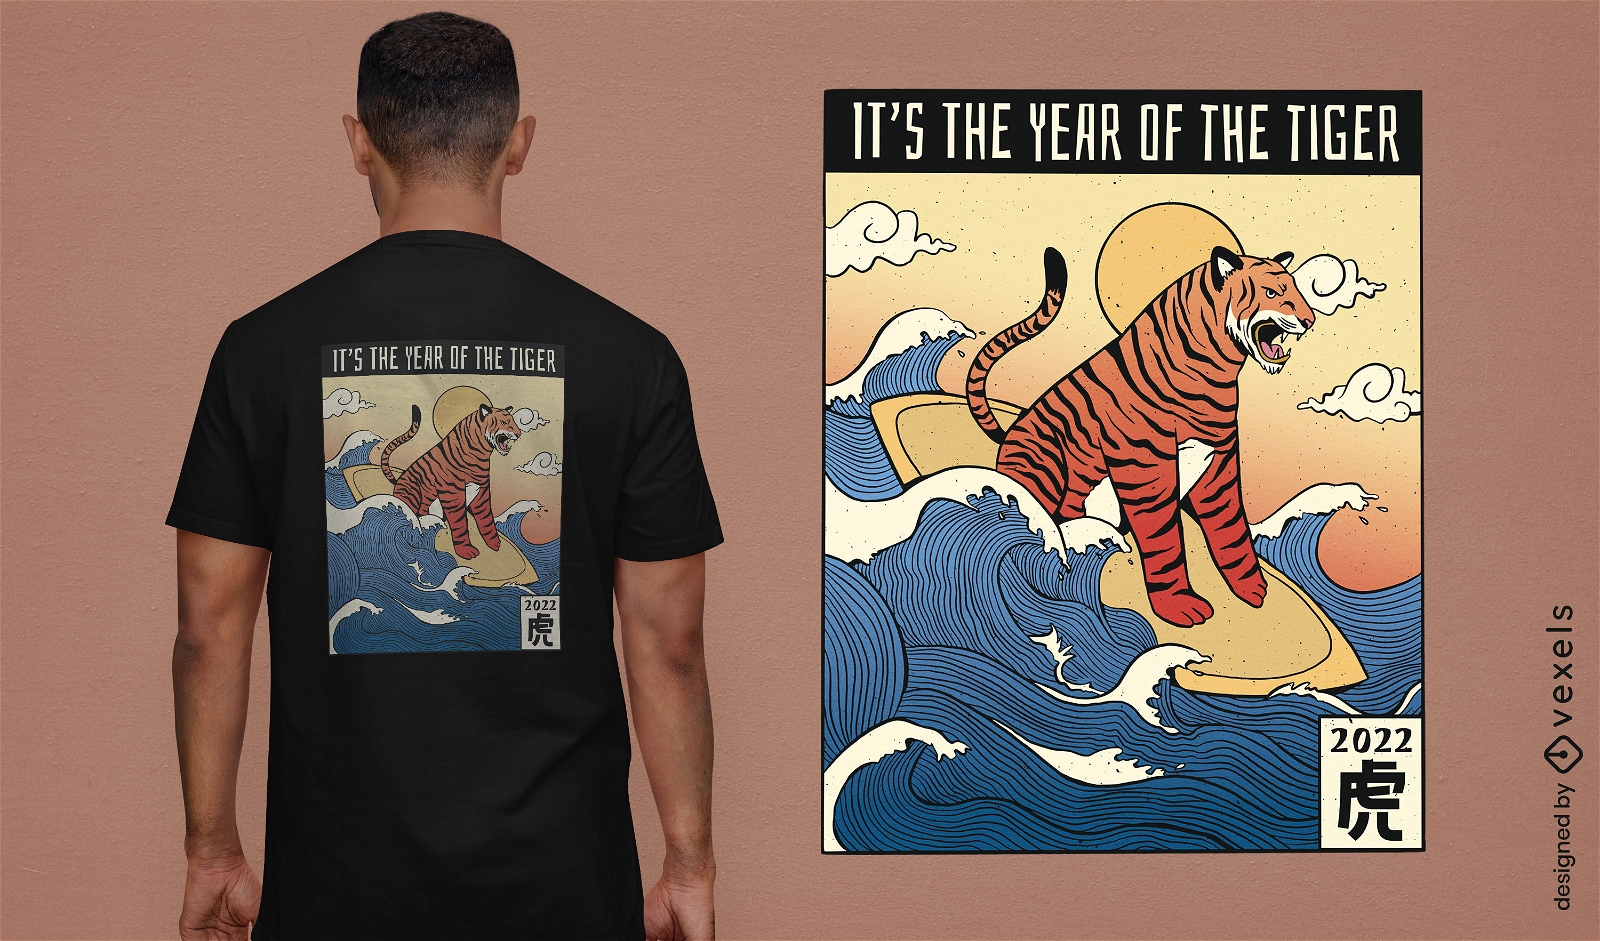 Tiger animal surfing wave t-shirt design